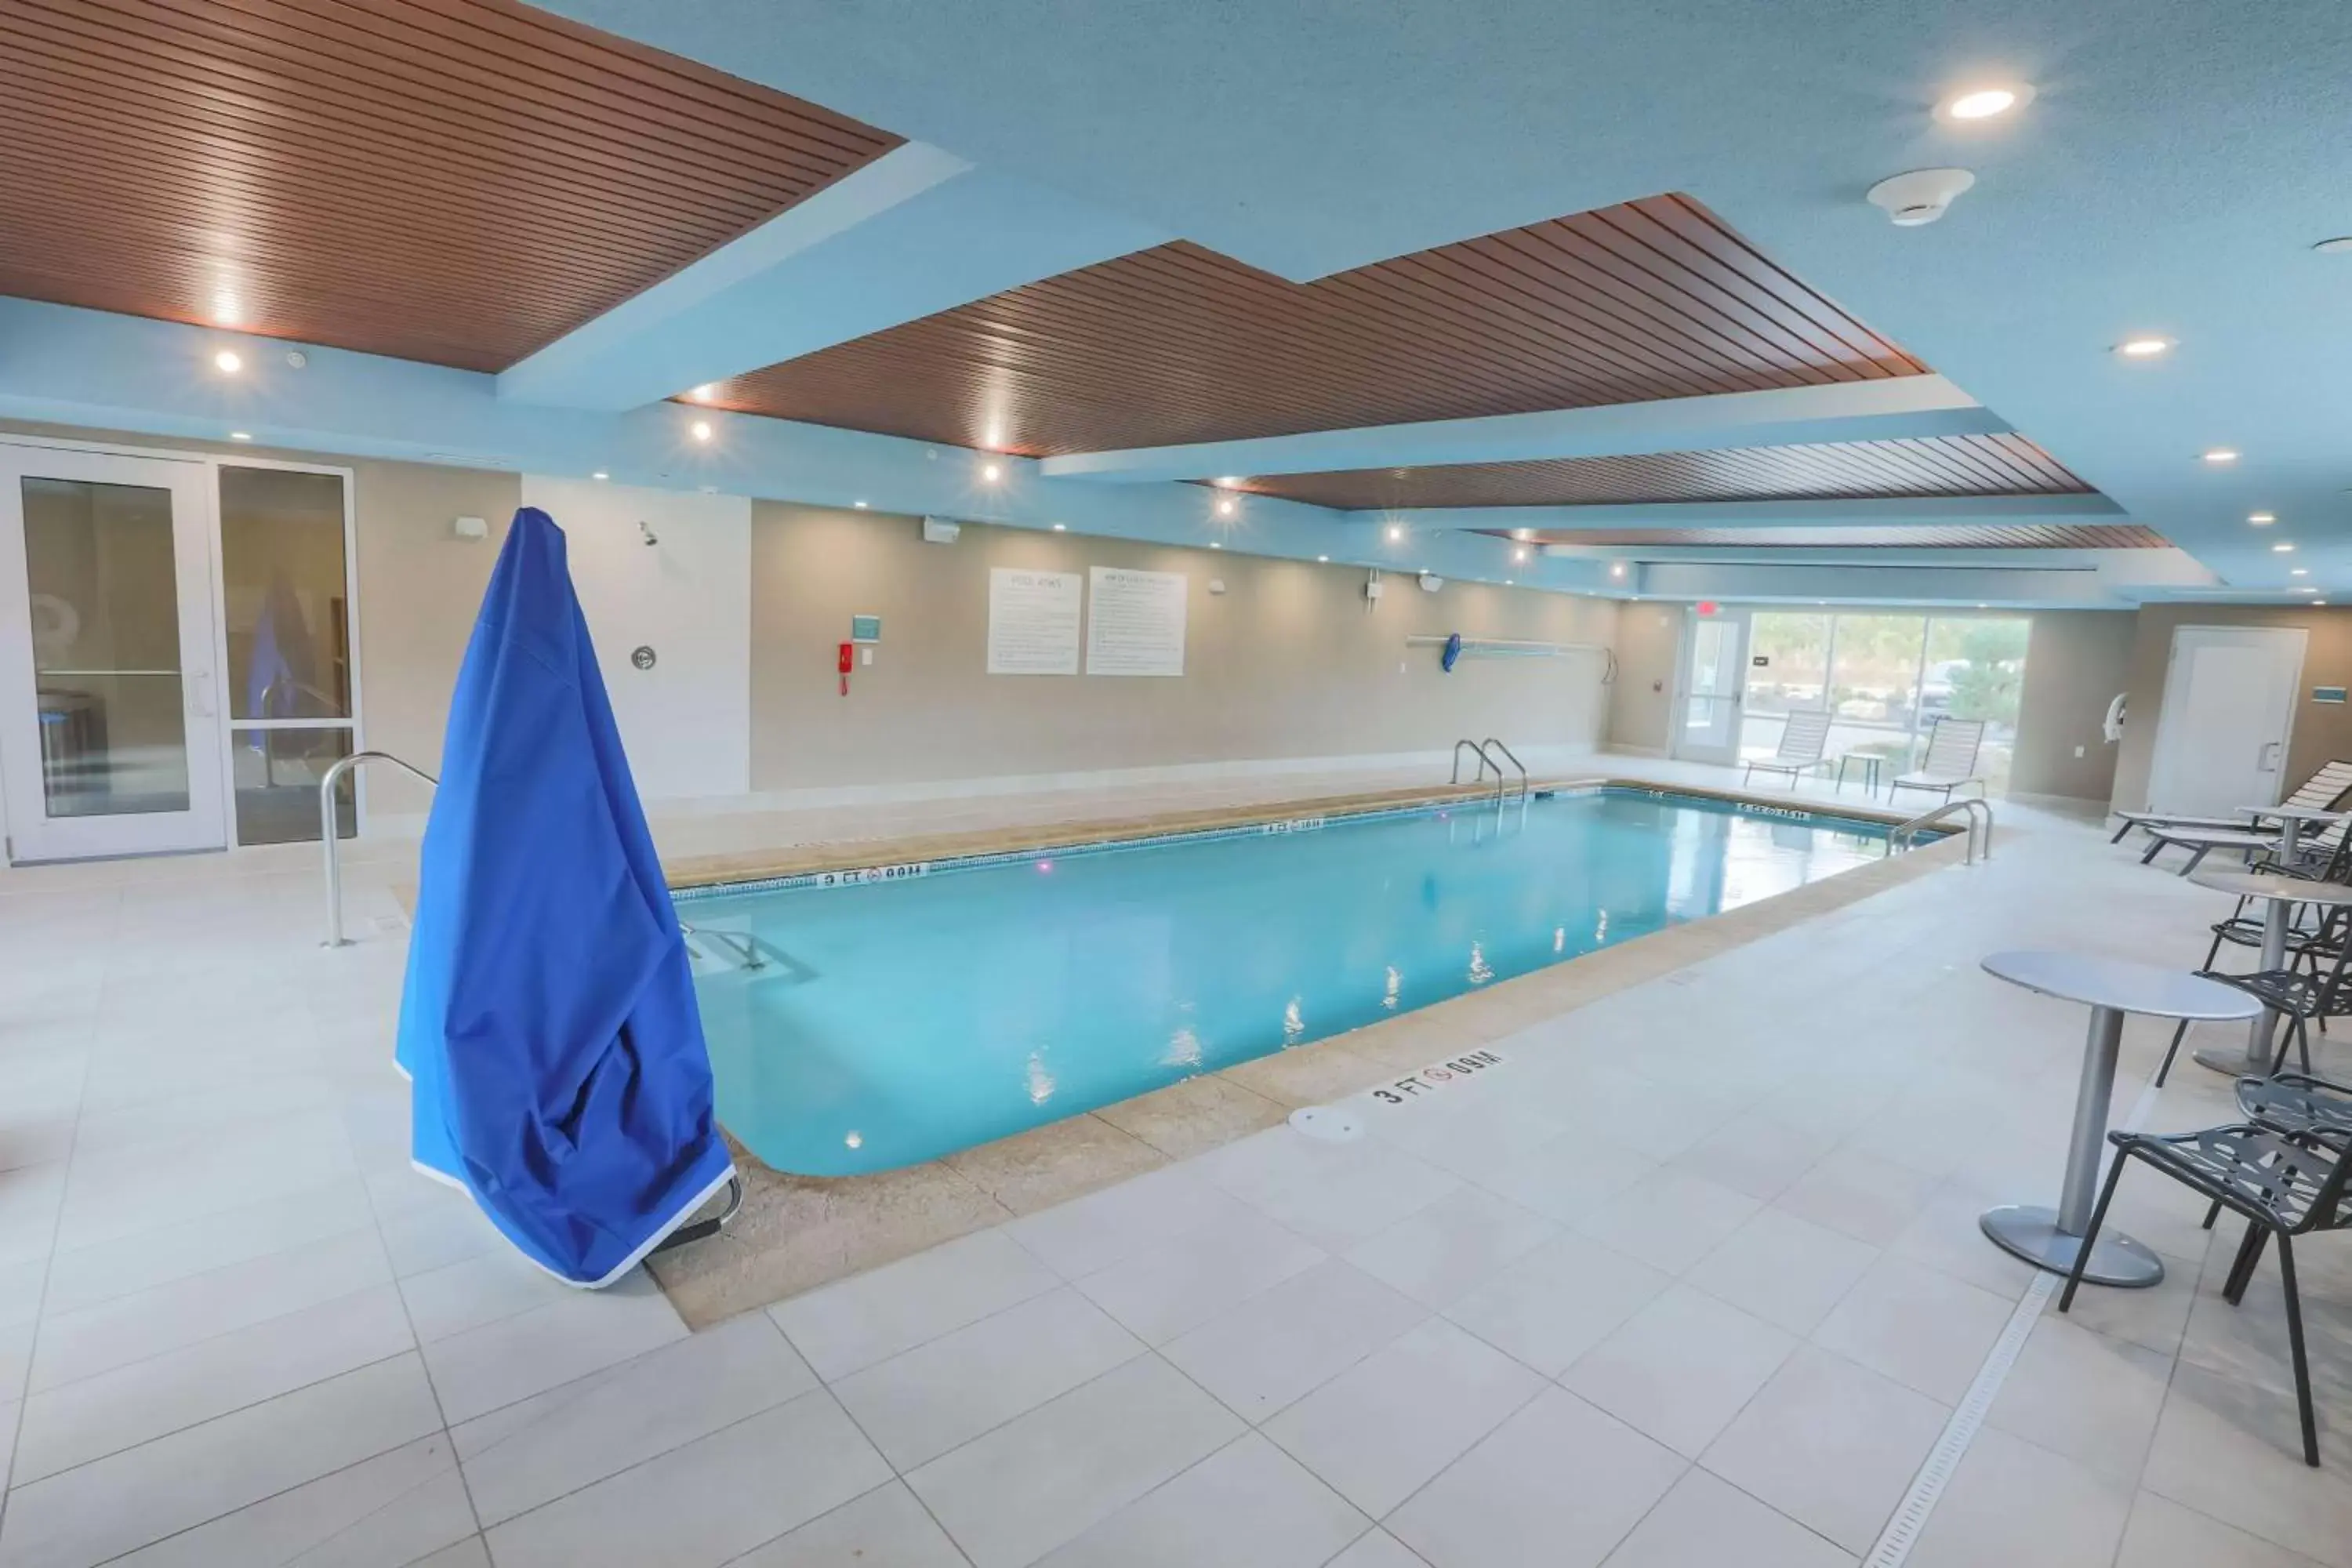 Swimming Pool in Home2 Suites By Hilton Cumming Atlanta, Ga